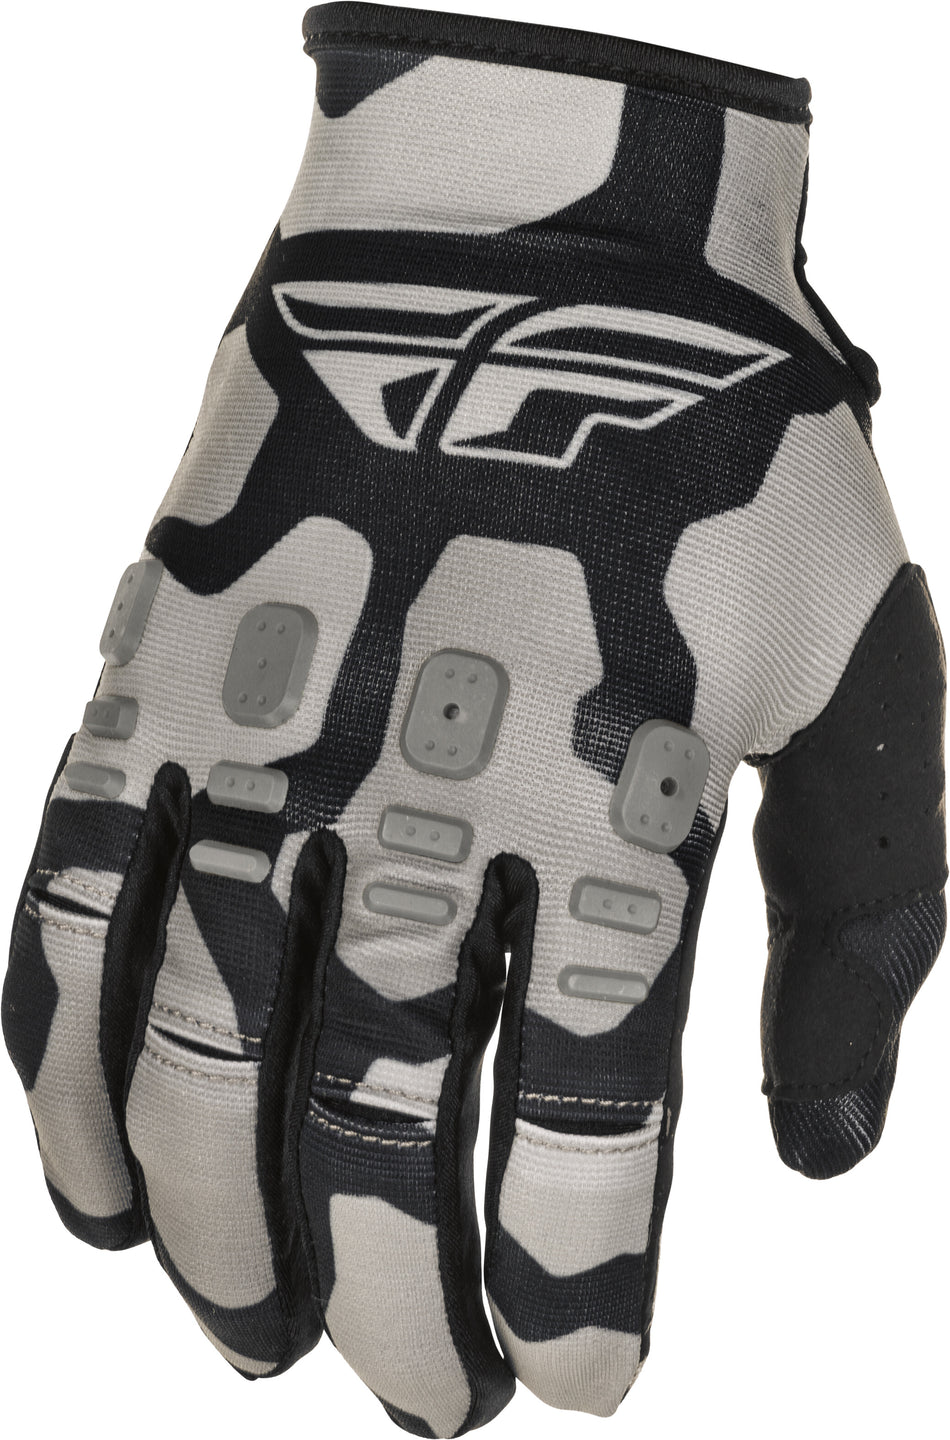 FLY RACING Youth Kinetic K221 Gloves Black/Grey Sz 05 374-51005